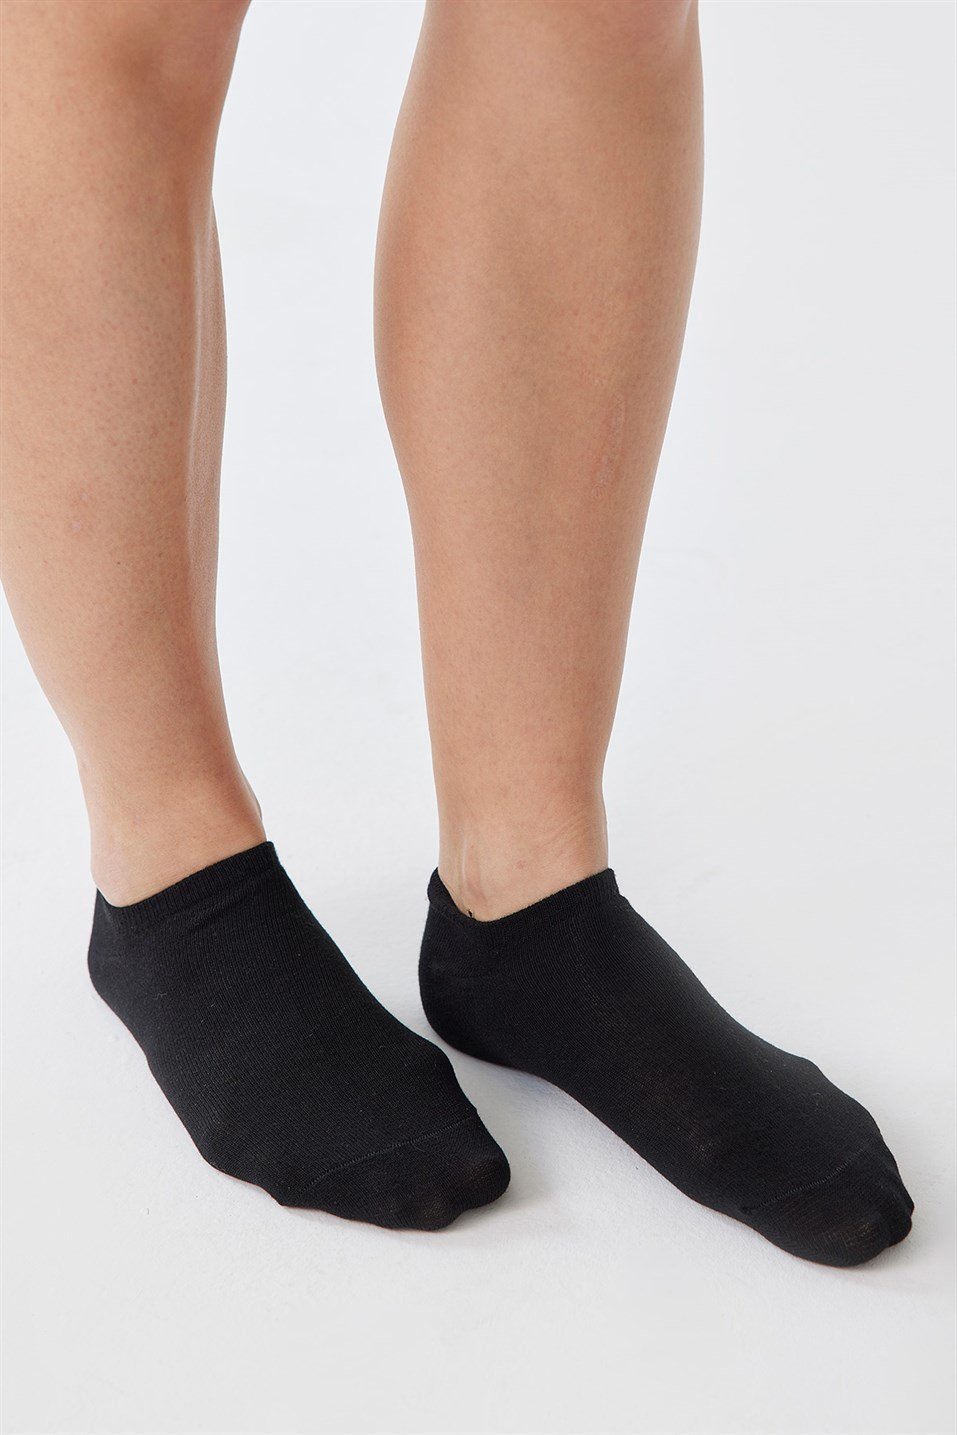 Black Cotton Booties Socks